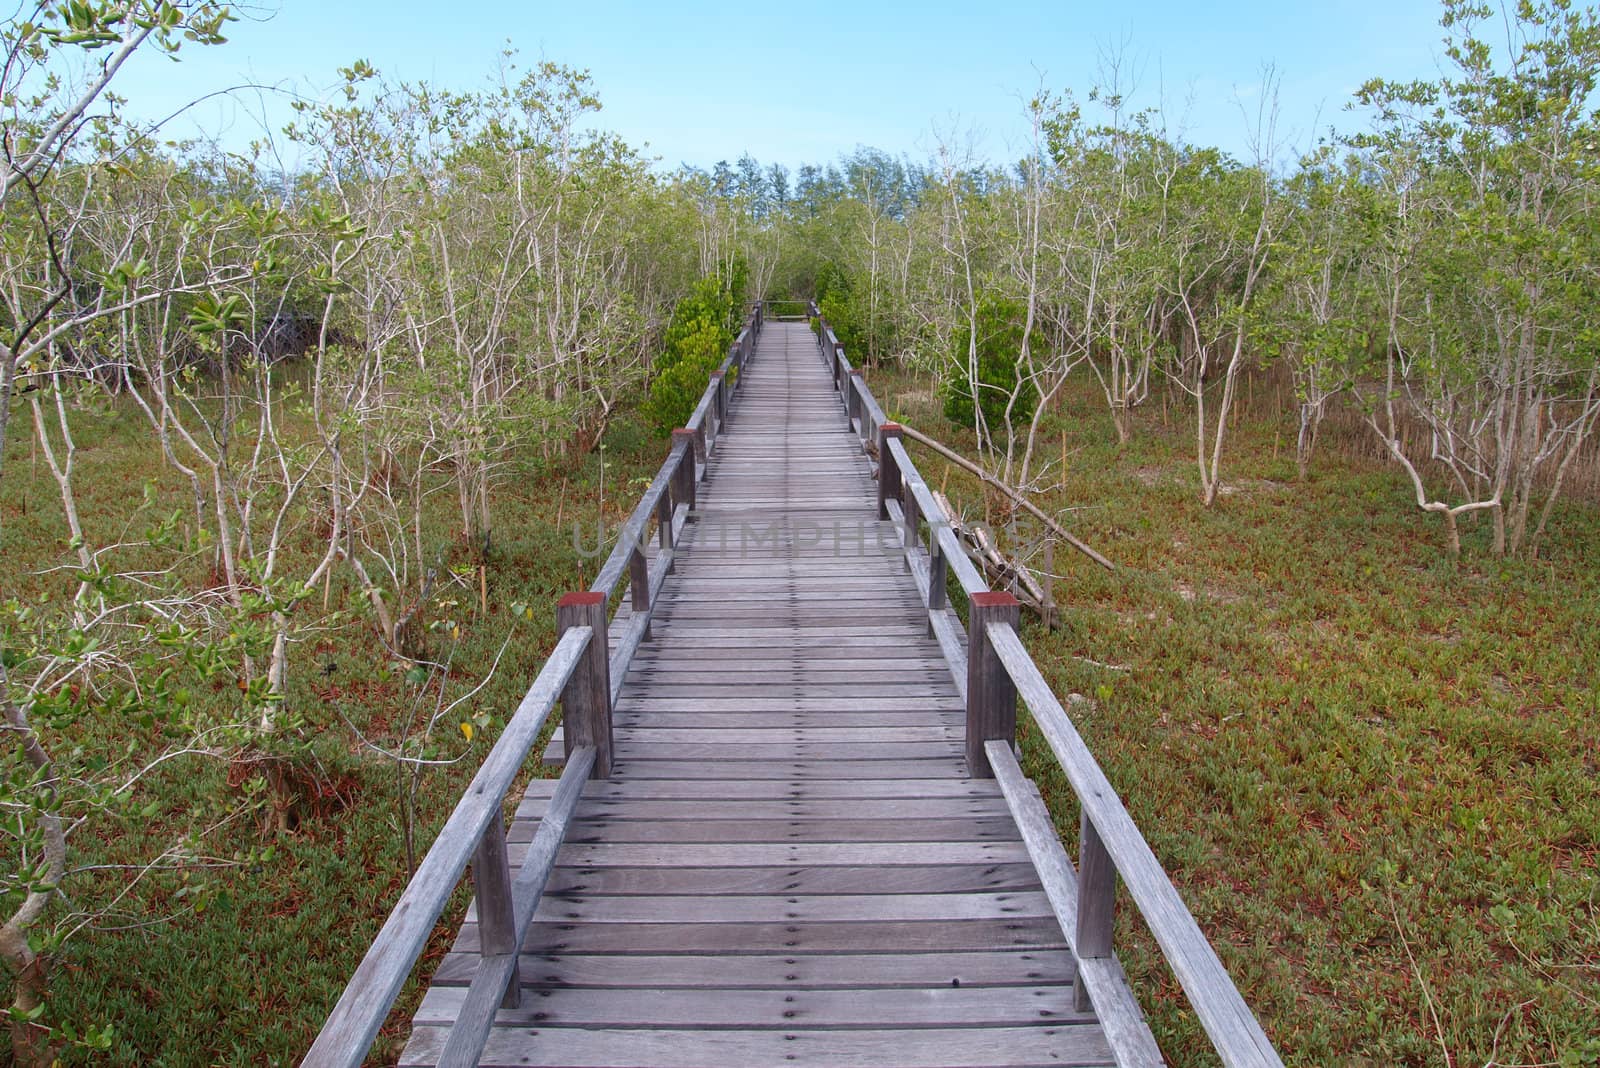 A wooden bridge on mangrove